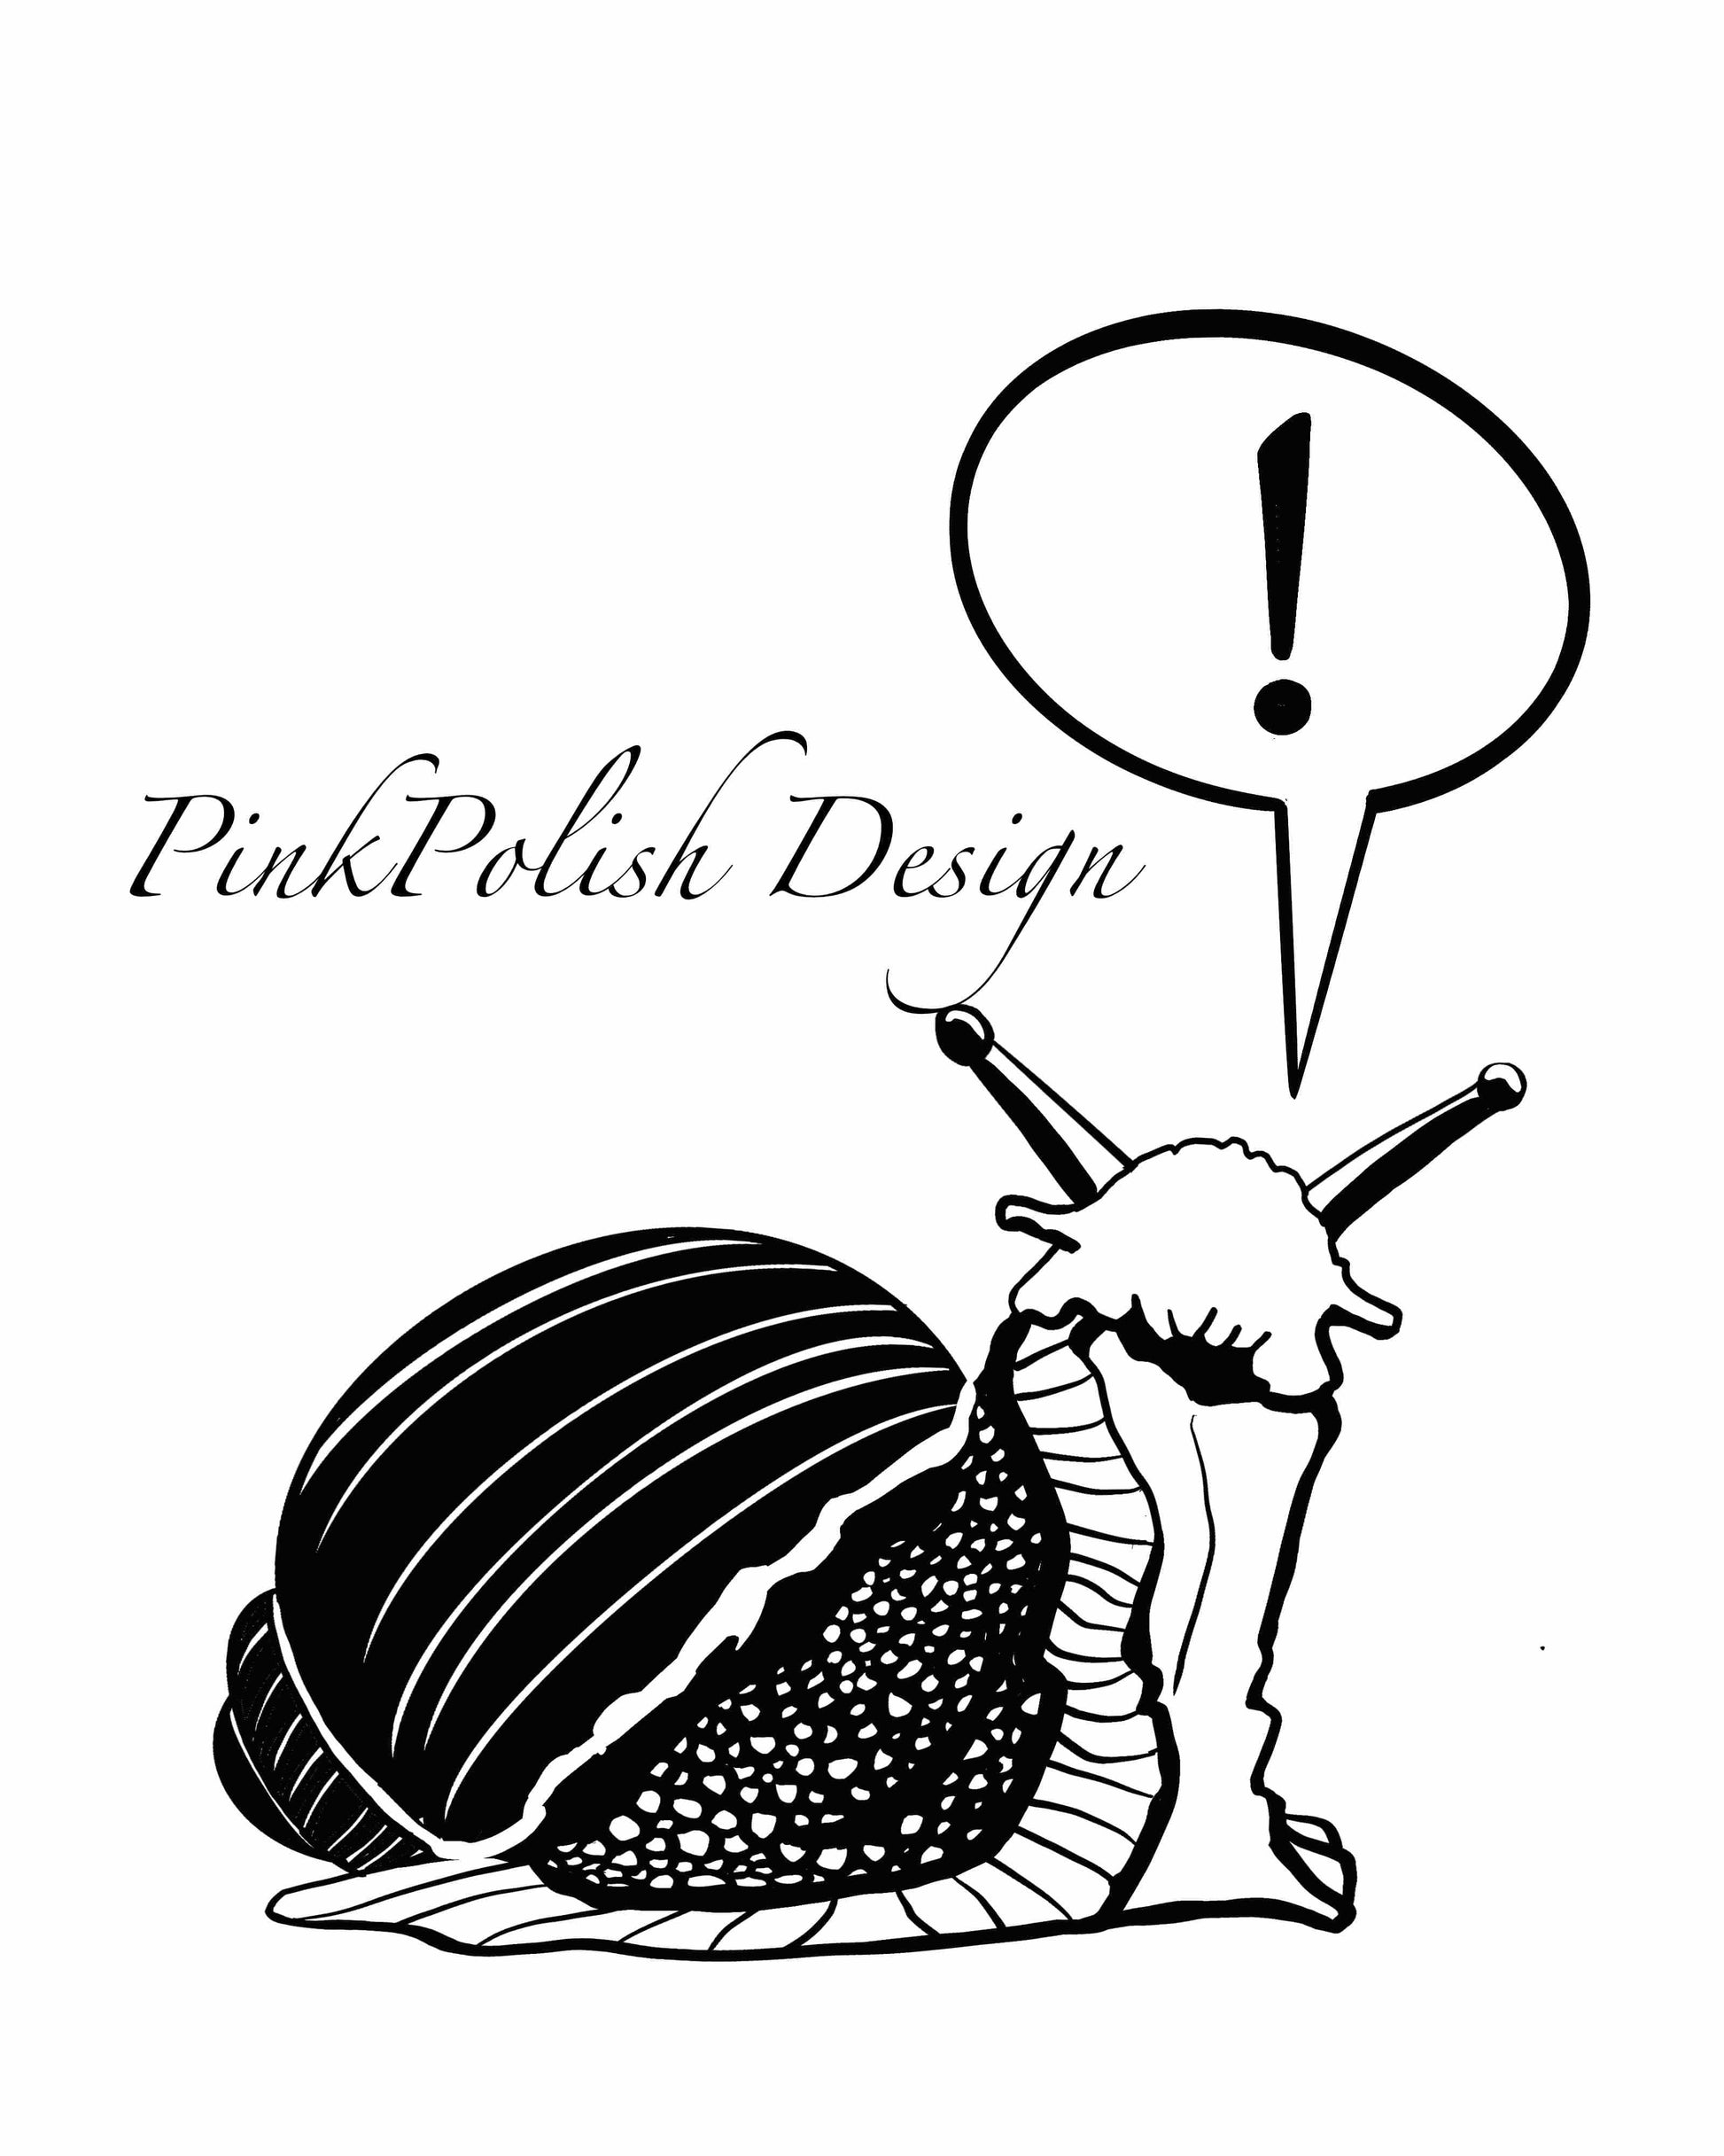 PinkPolish Design Art Prints "Surprised Snail" Digital Drawing: Art Print